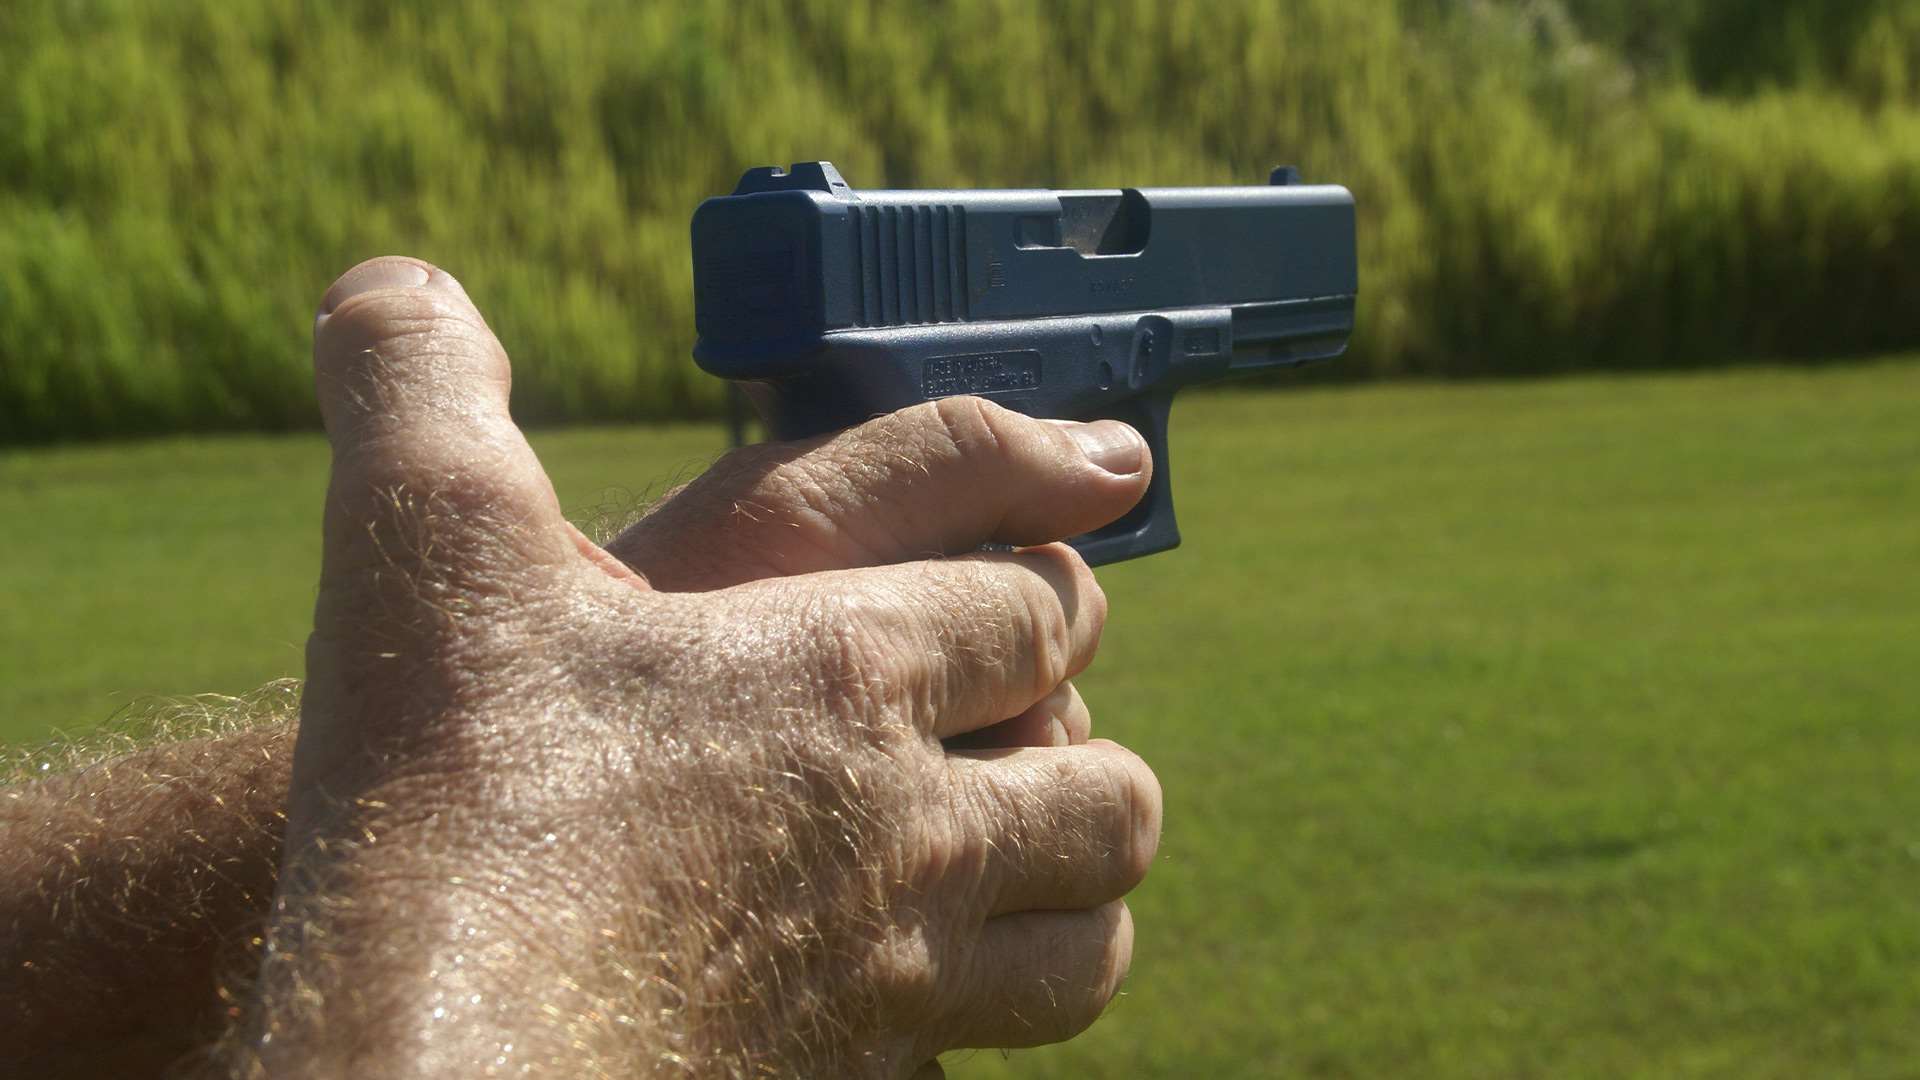 Glock pistol ambidextrous freestyle grip